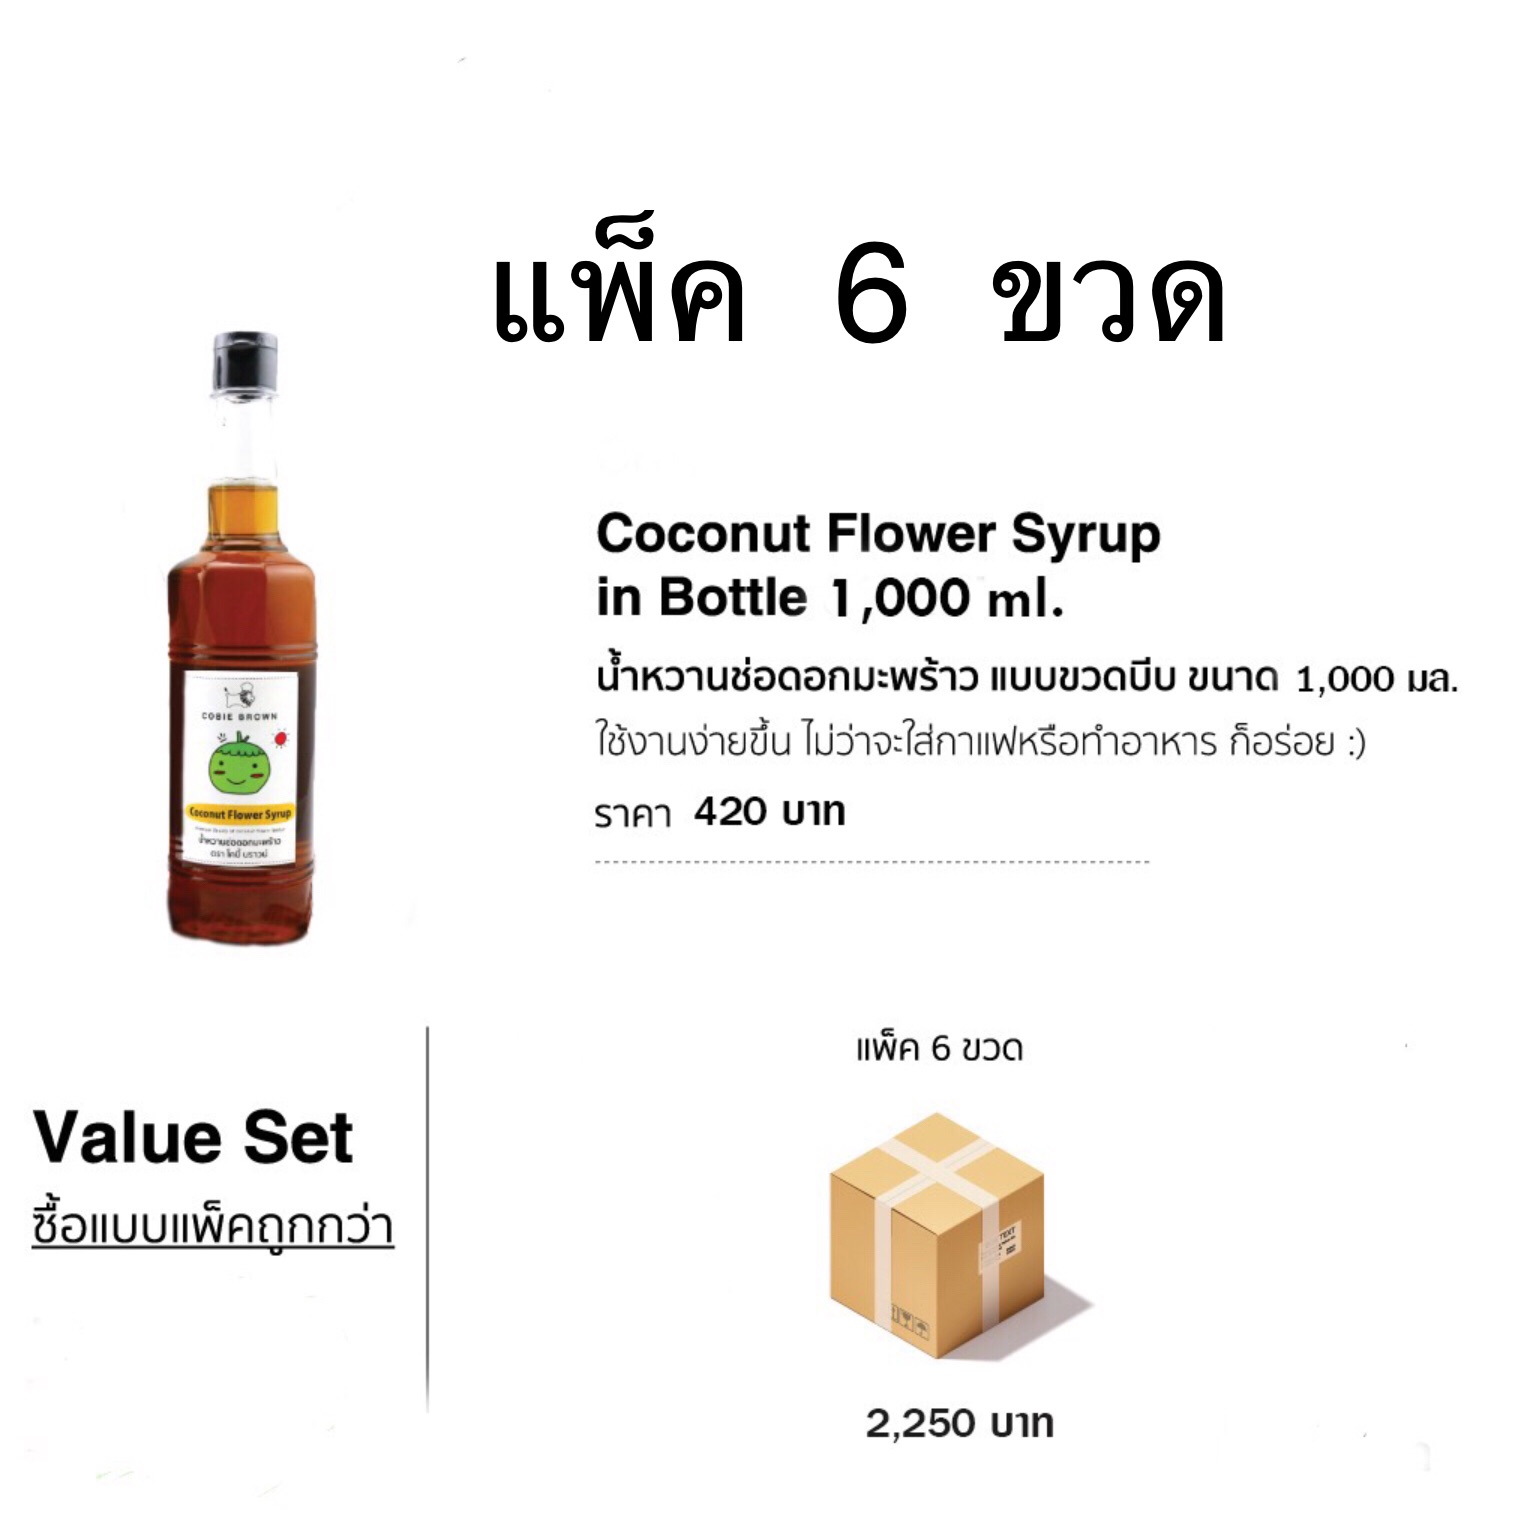 Coconut Flower Syrup in Bottle 1,000 ml. X 6